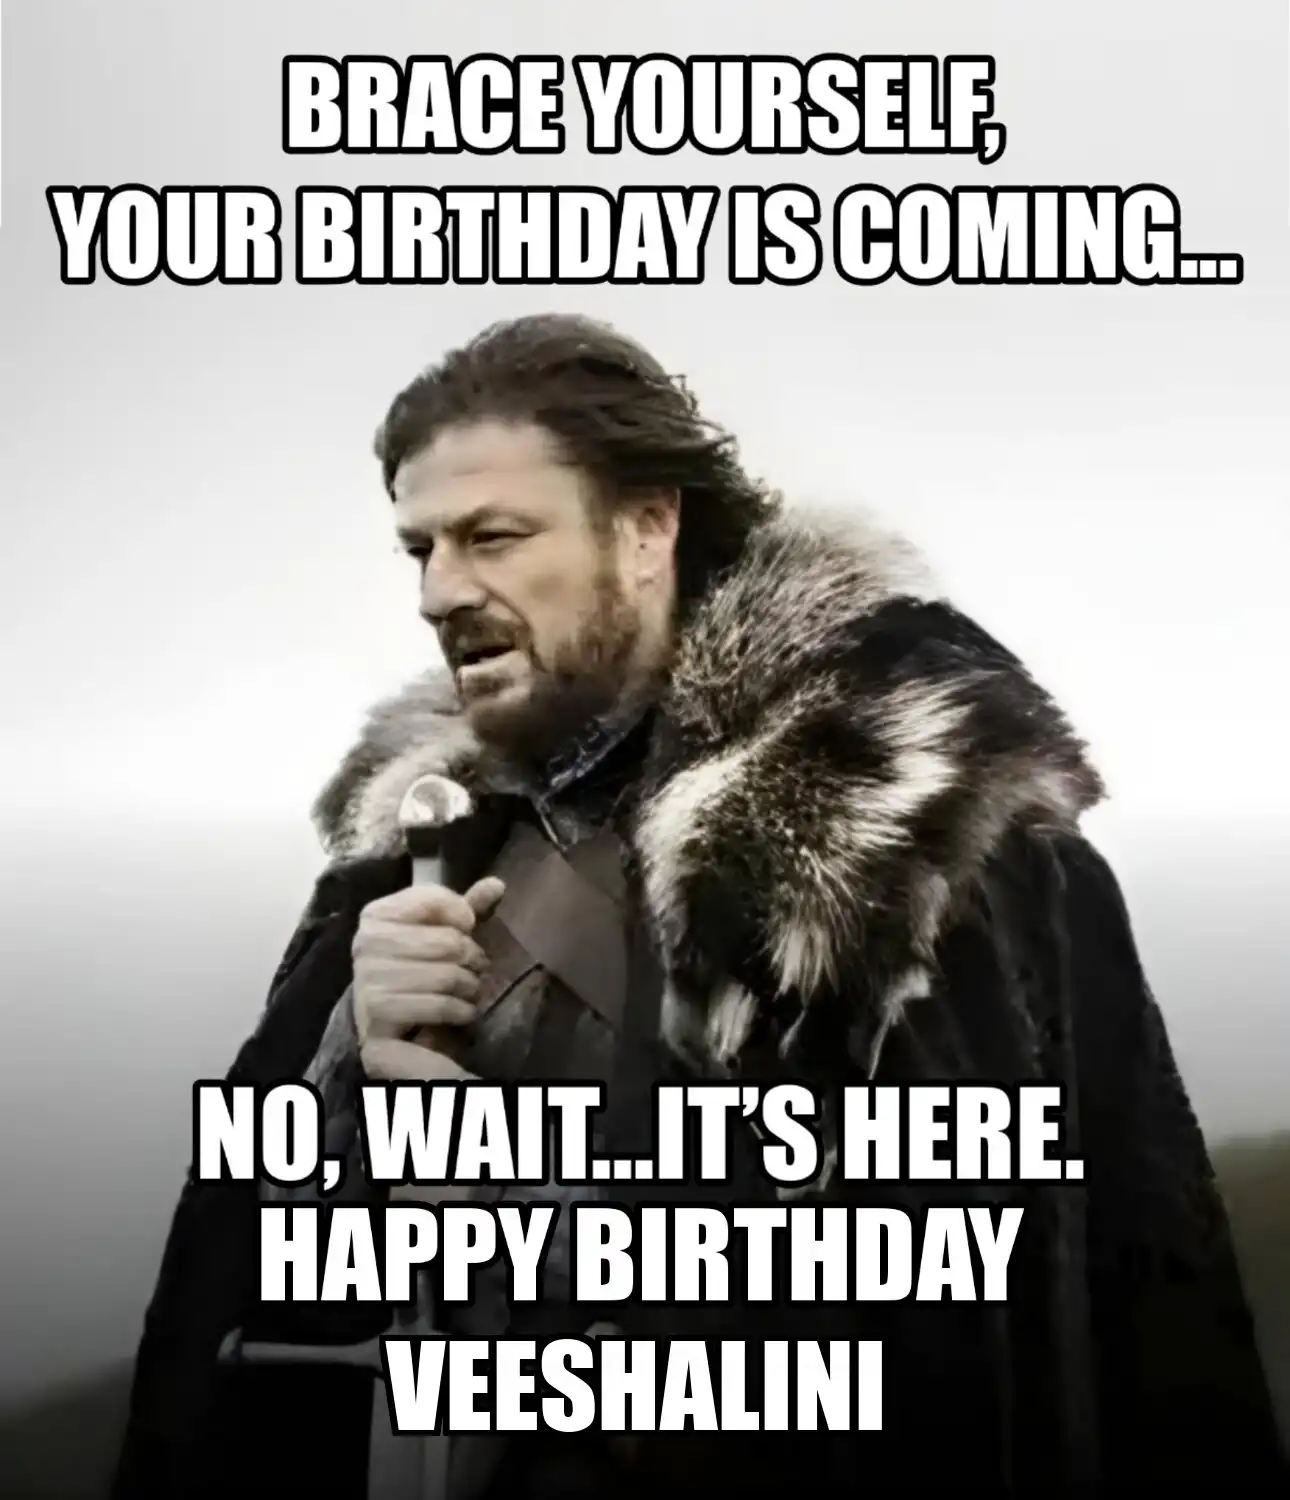 Happy Birthday Veeshalini Brace Yourself Your Birthday Is Coming Meme